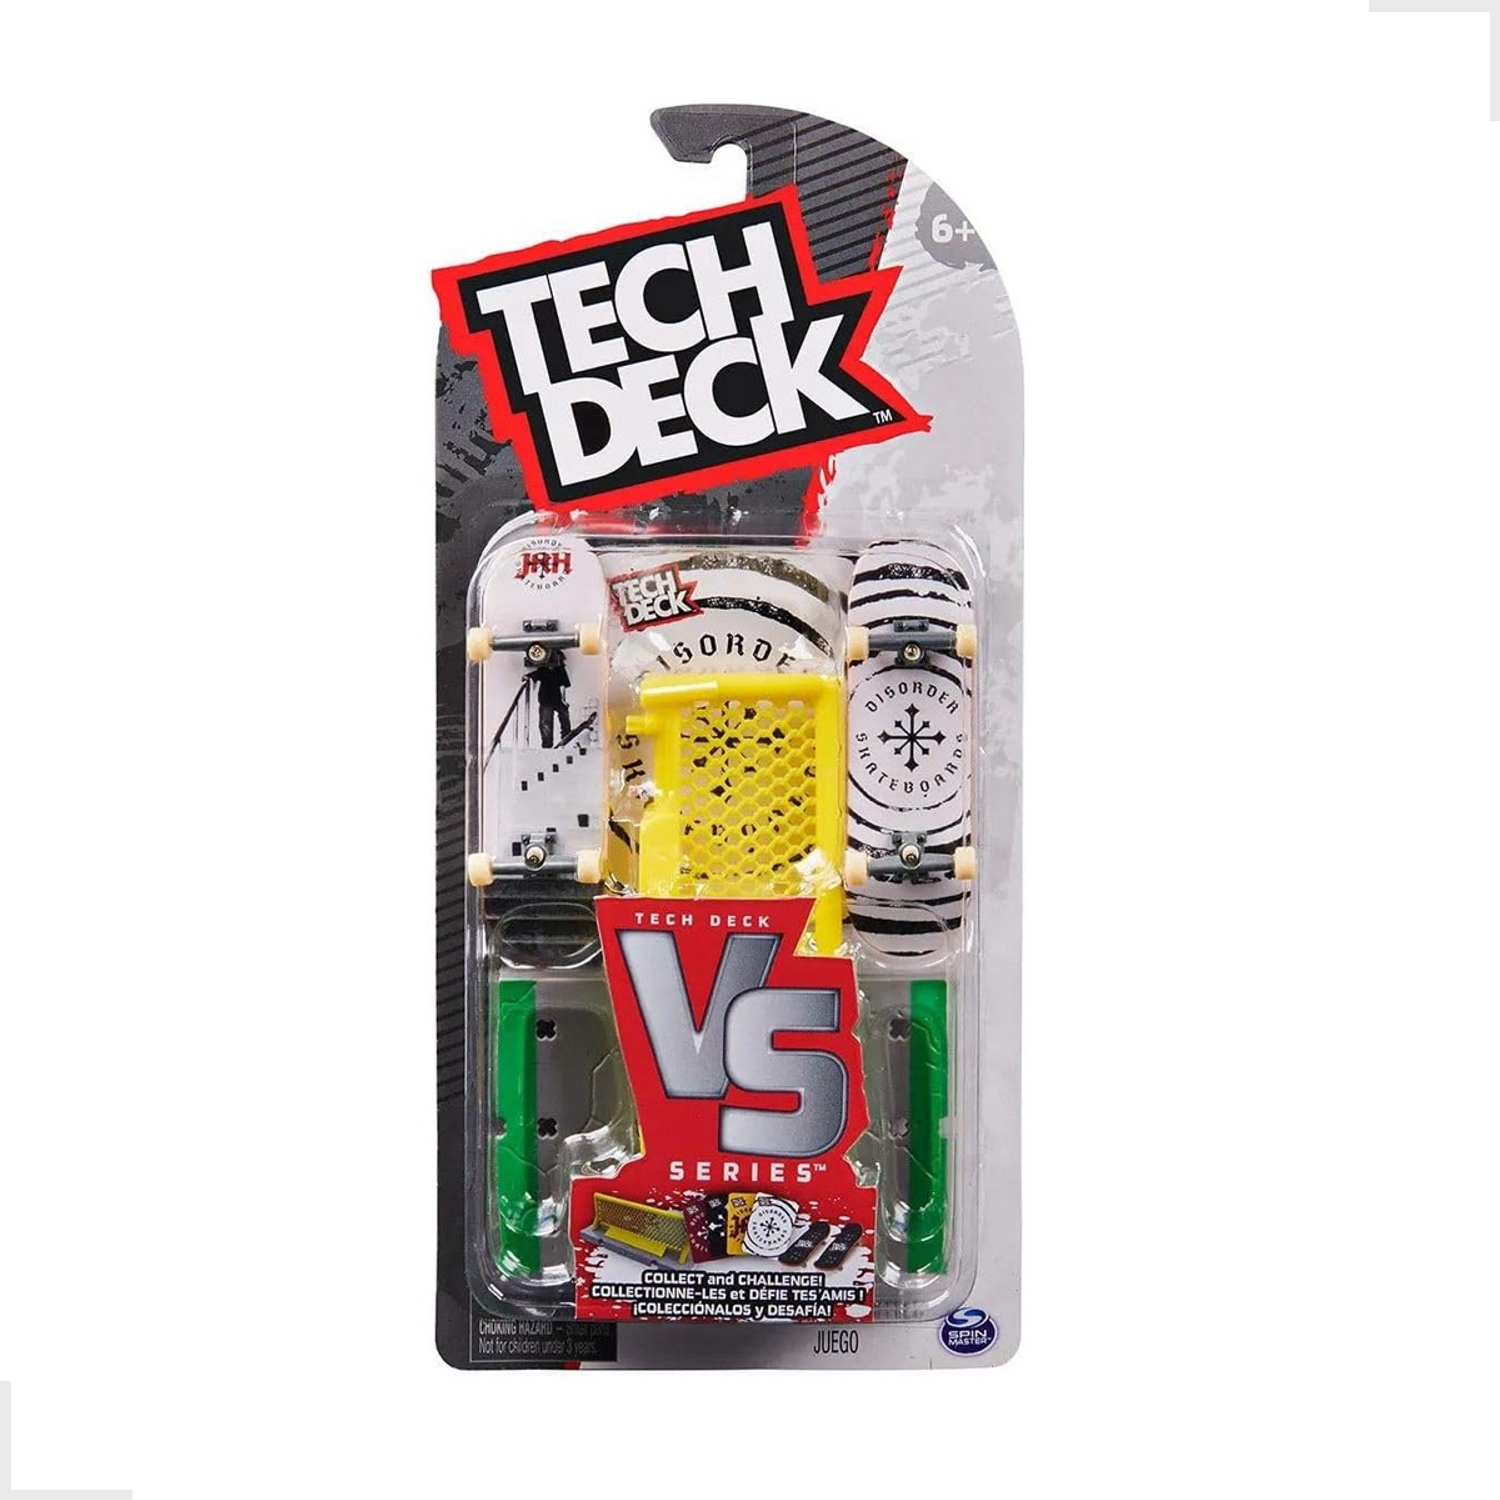 Tech Deck - Pack 2 mini skates de dedo versão Versus - Element